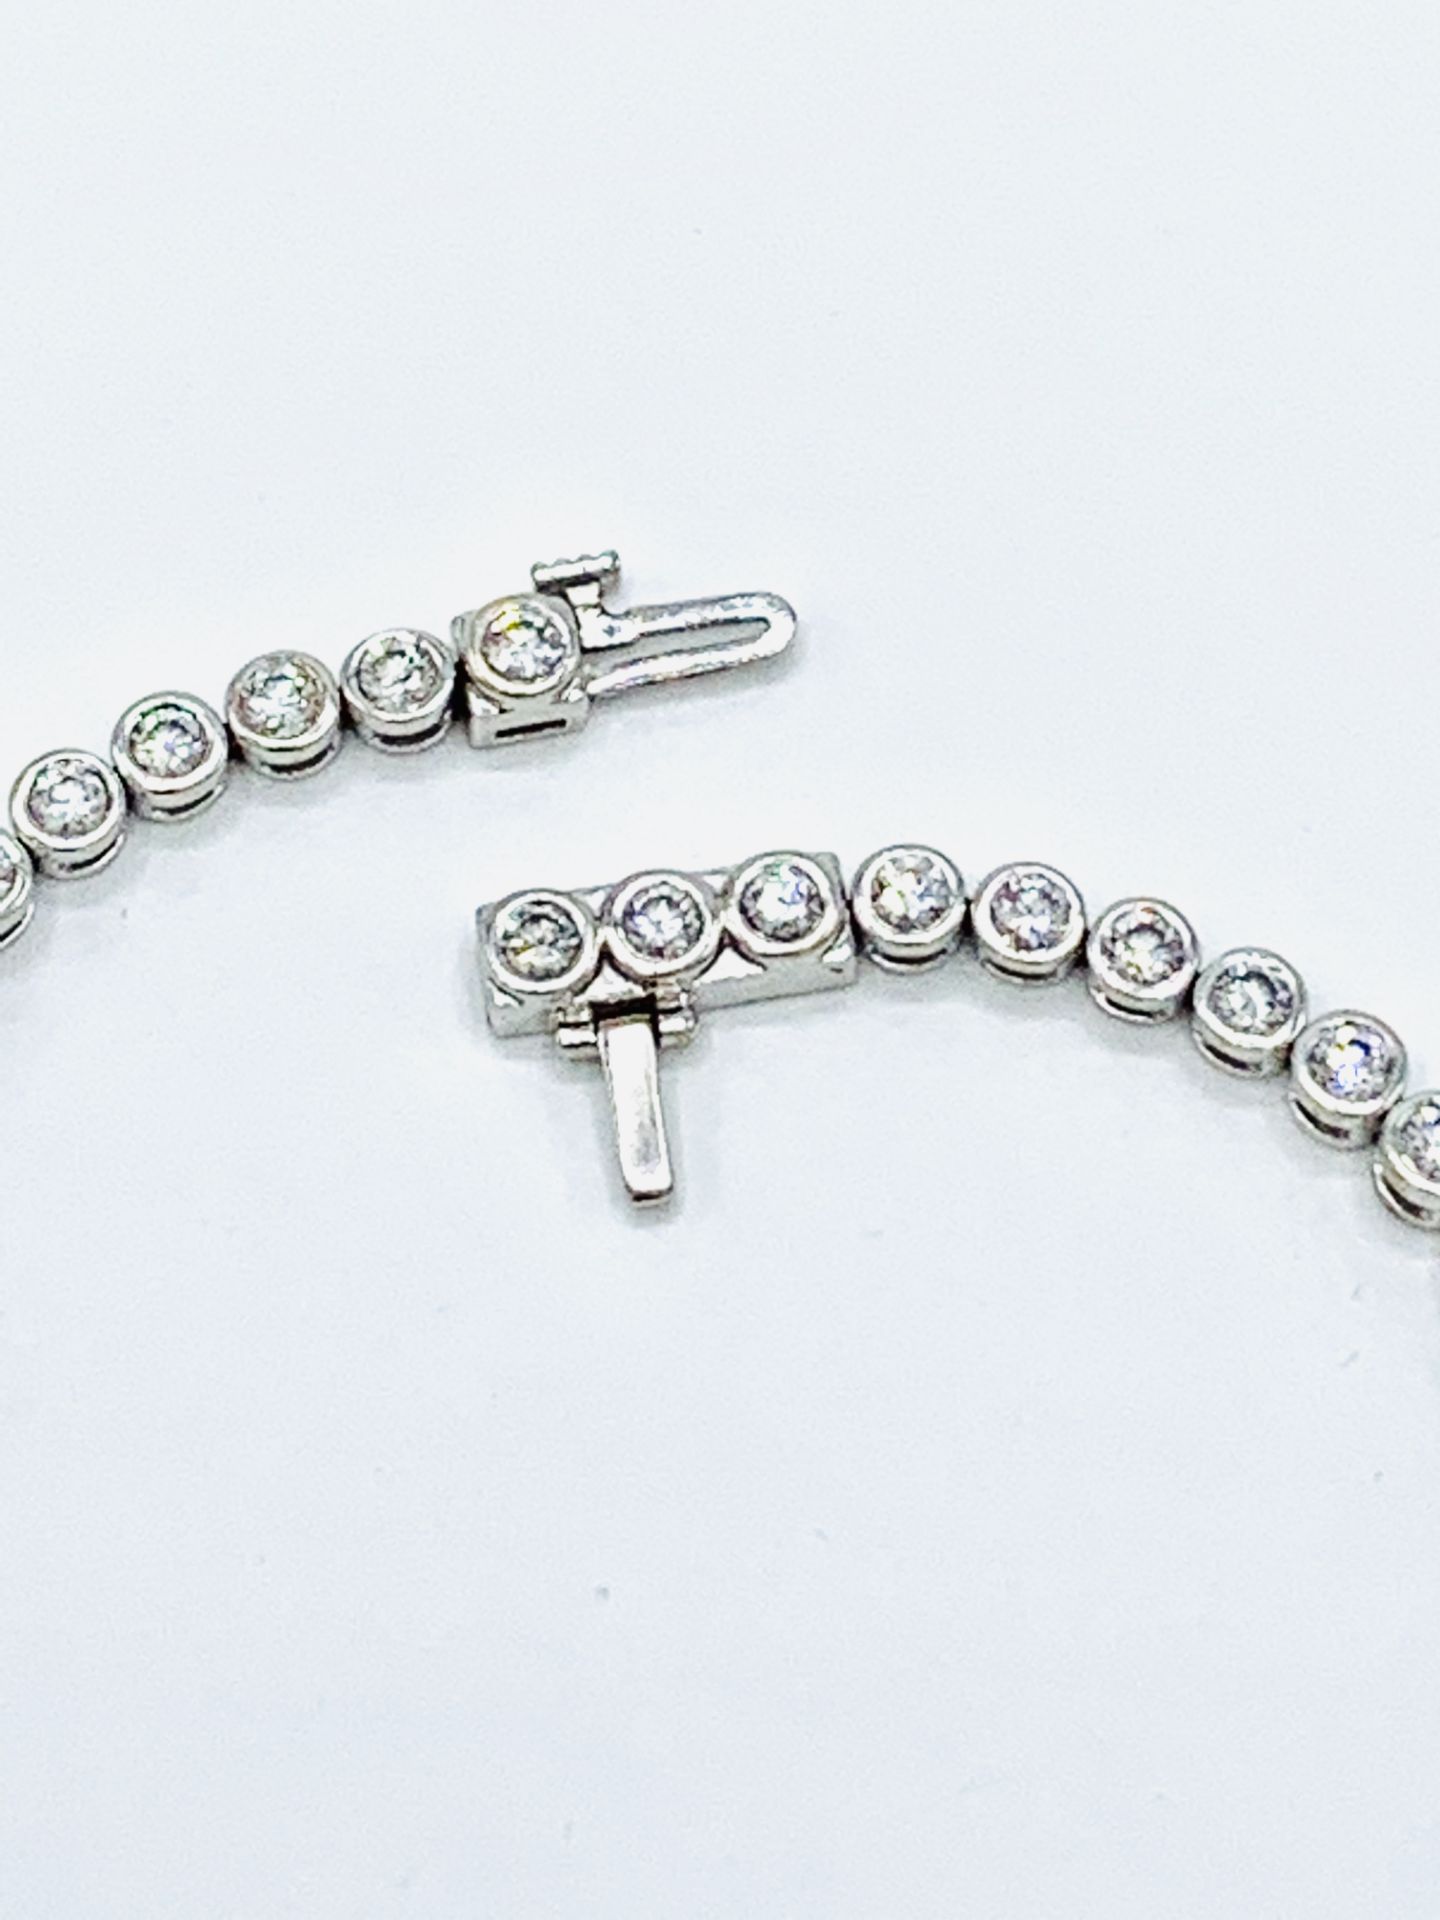 18ct white gold and diamond tennis bracelet. - Image 7 of 7